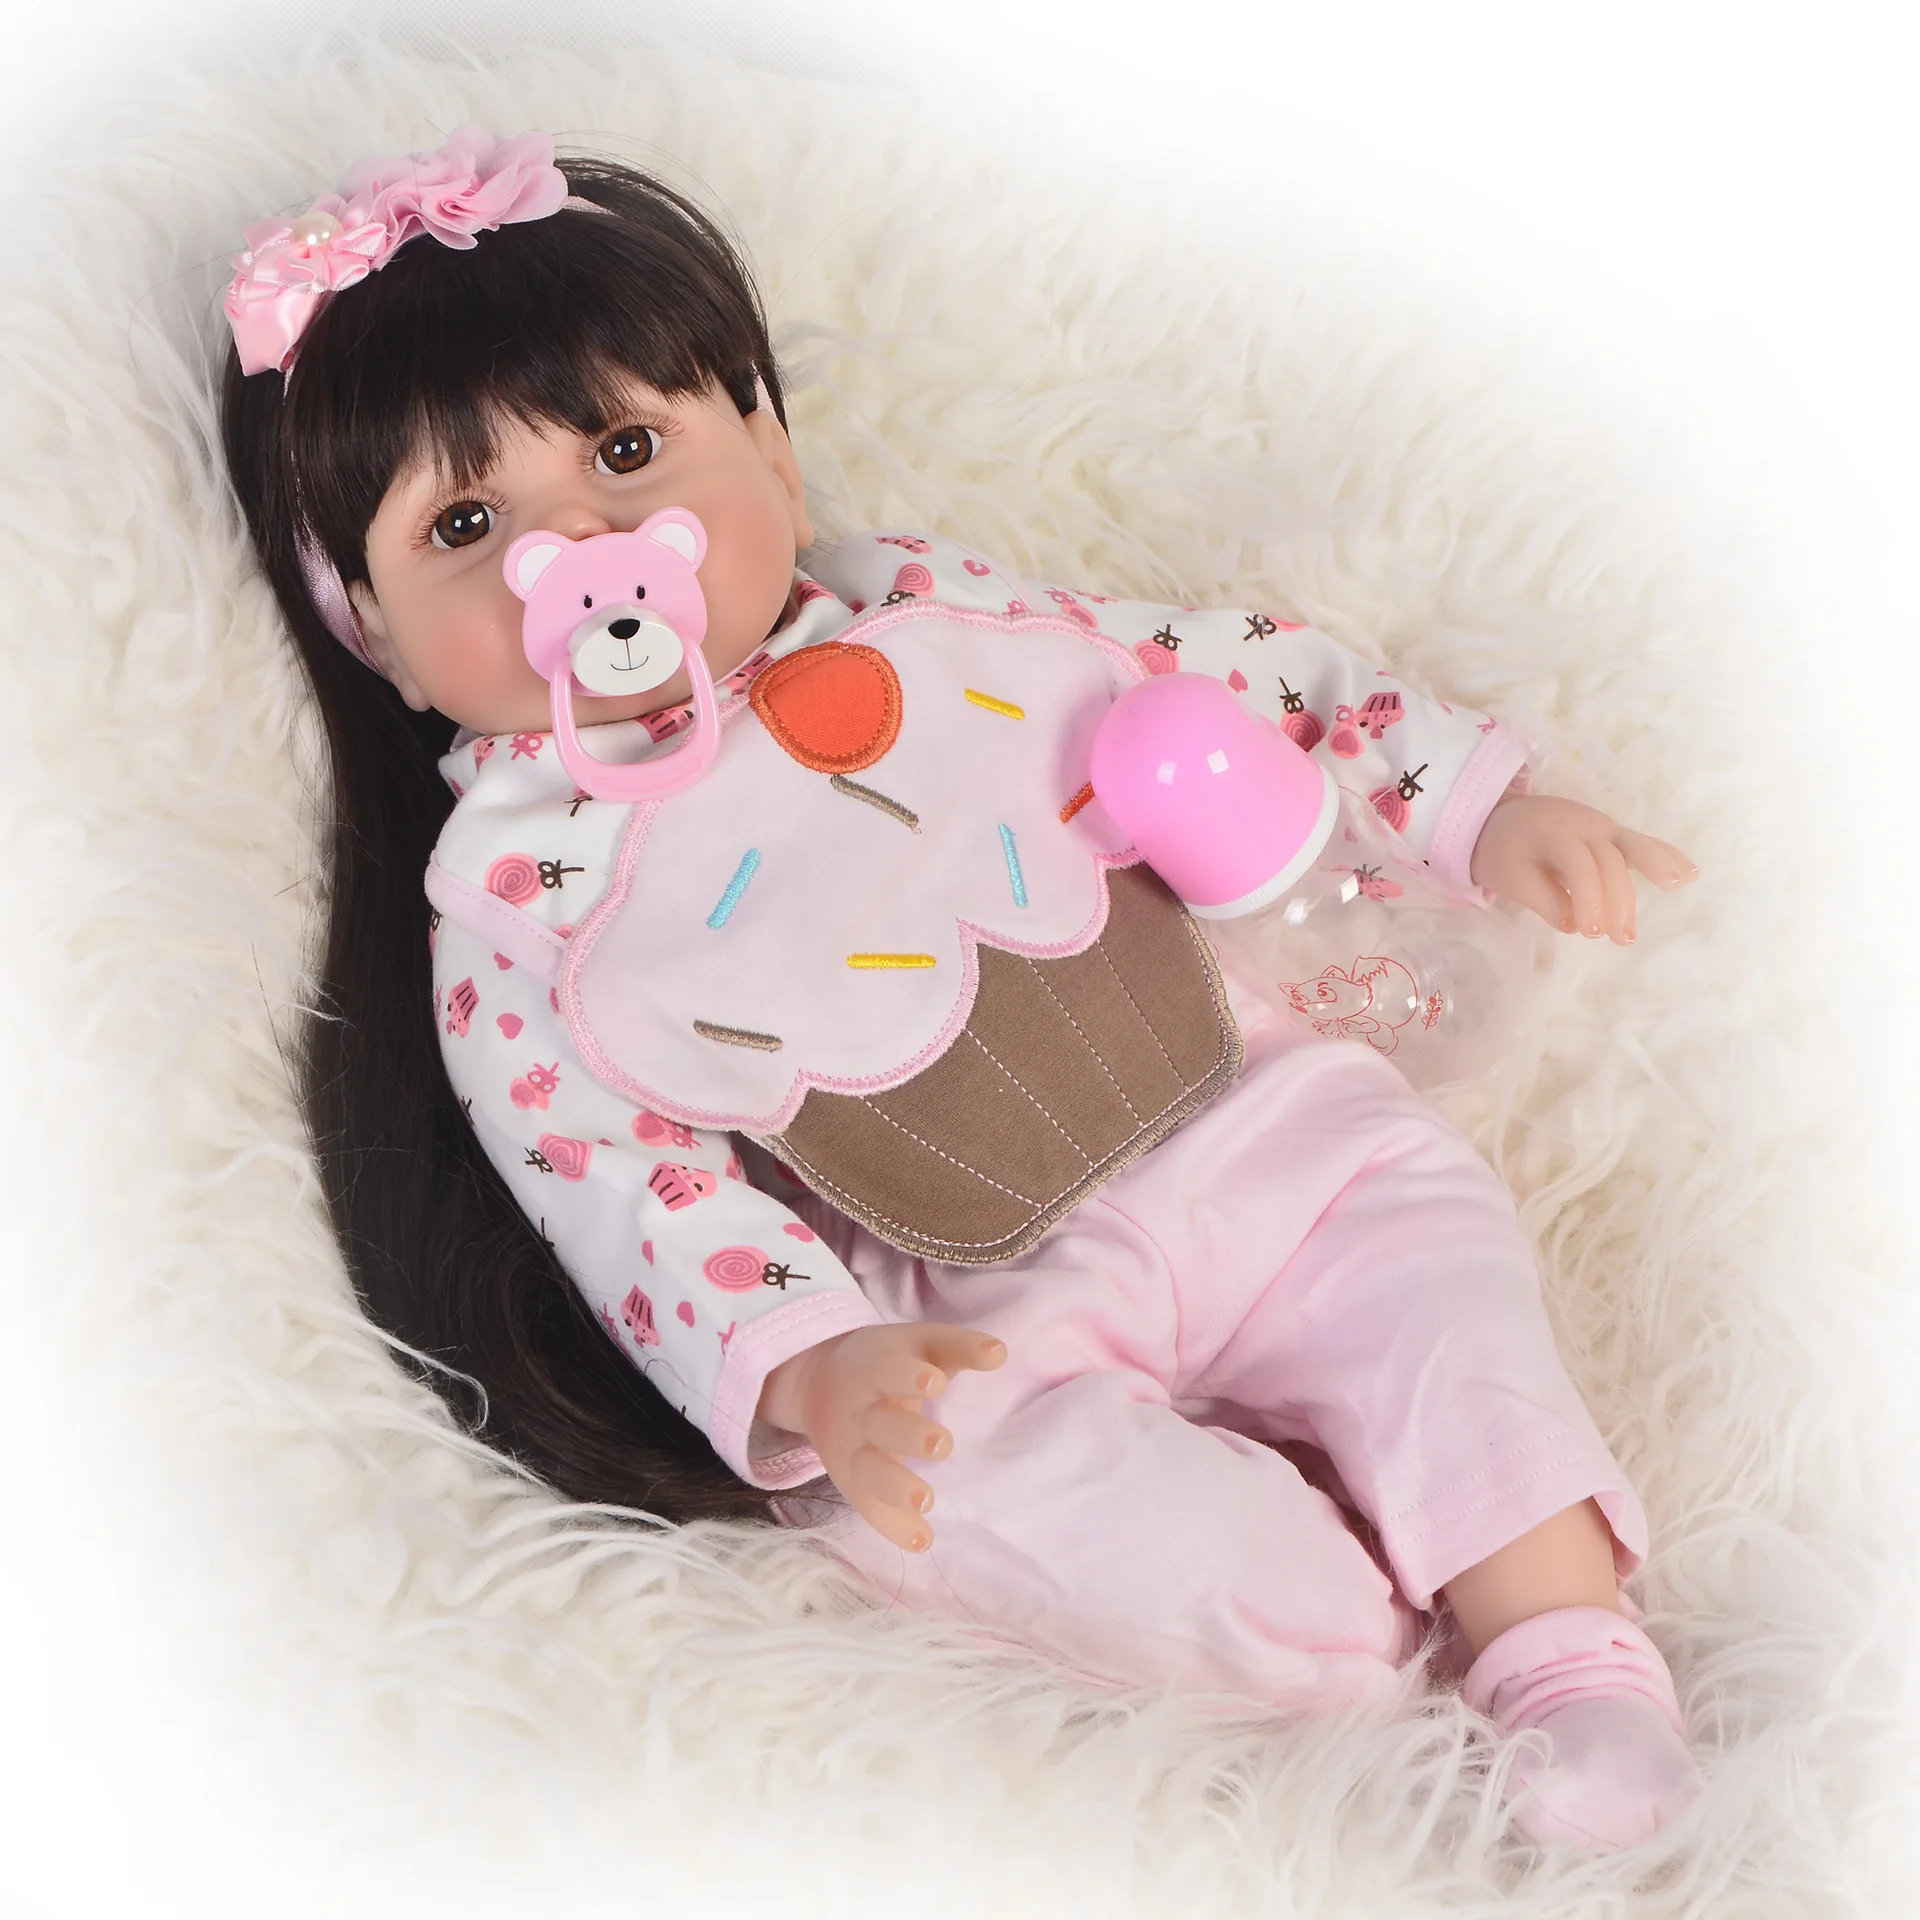  Keiumi Reborn Baby Doll Model Infant 55 Cm Long Hair Princess New Style